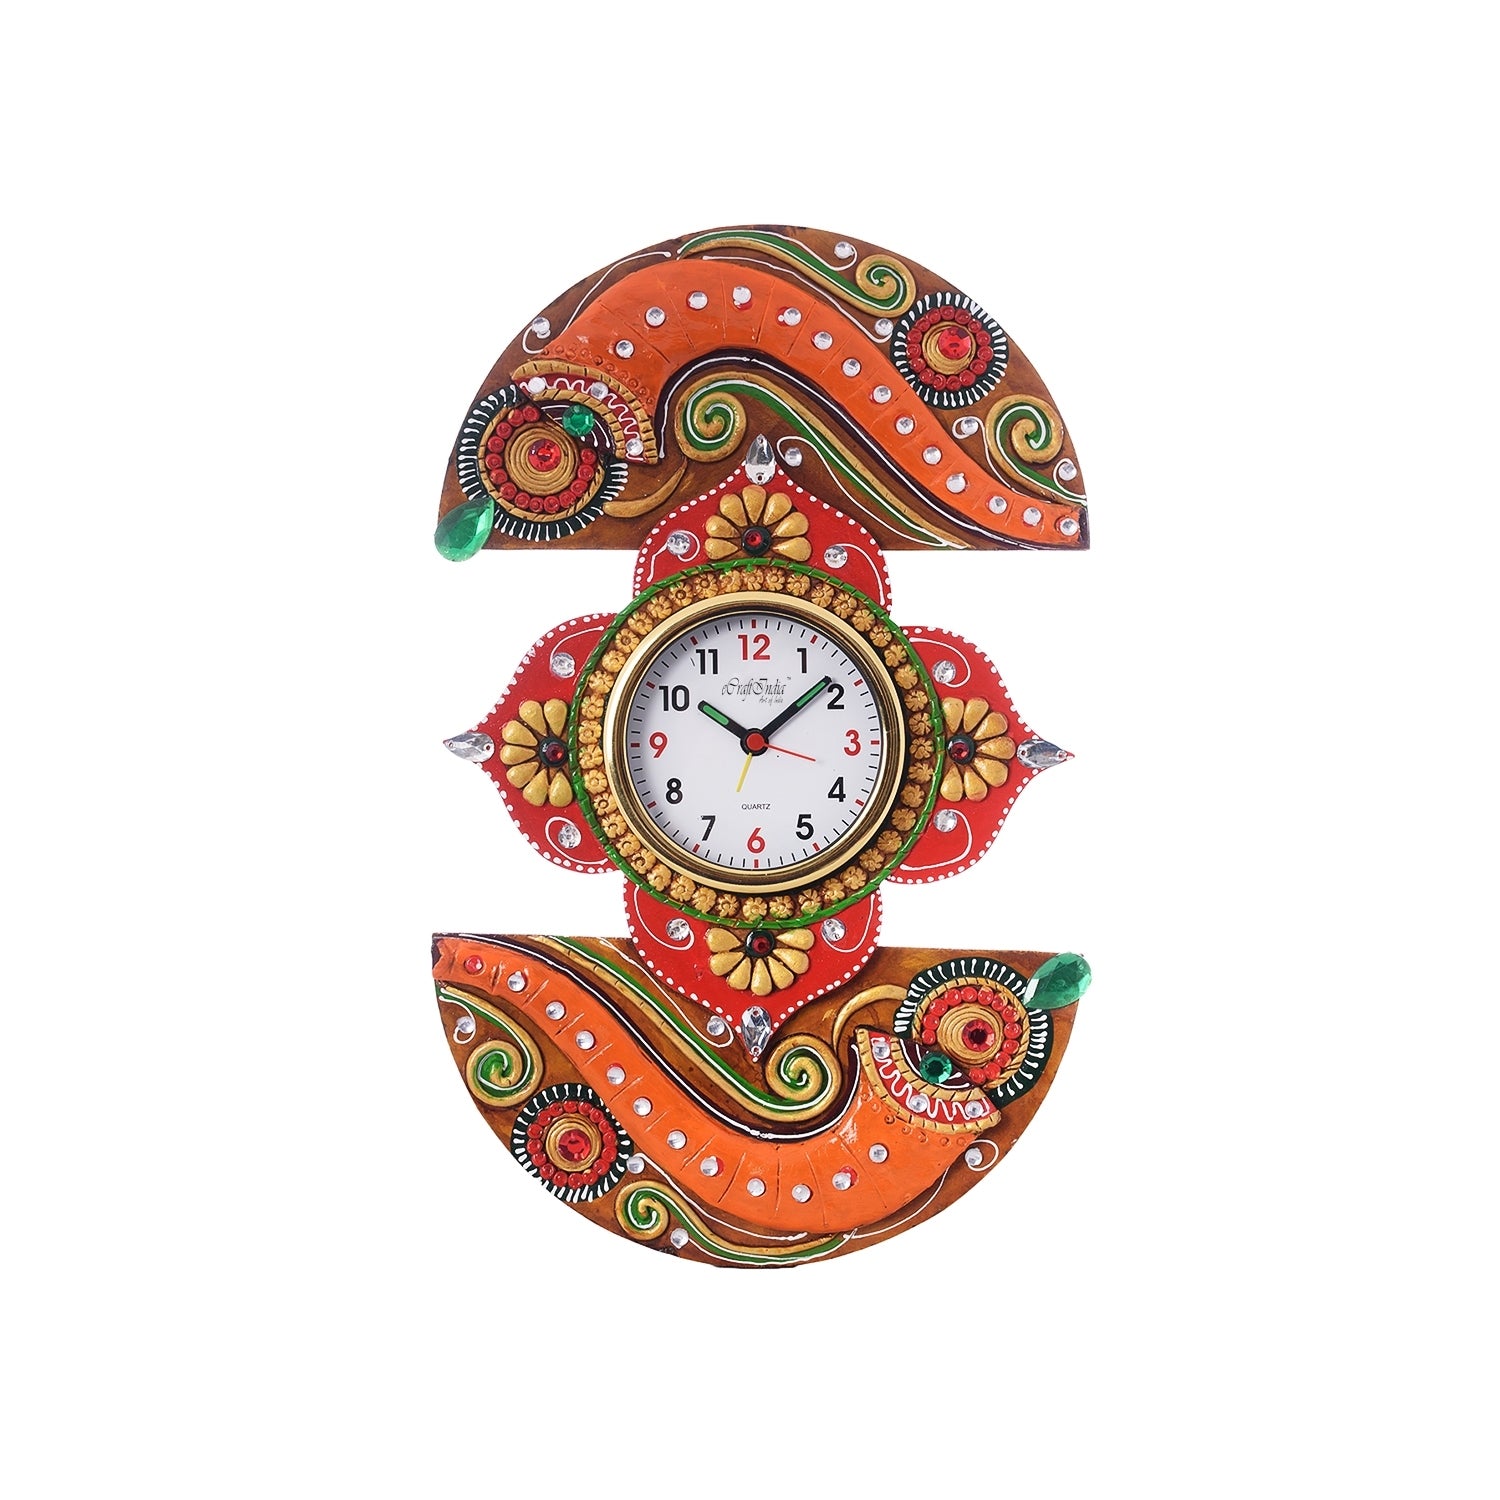 Shehnai Embossed Artistic Papier-Mache Wooden Handicrafted Wall Clock